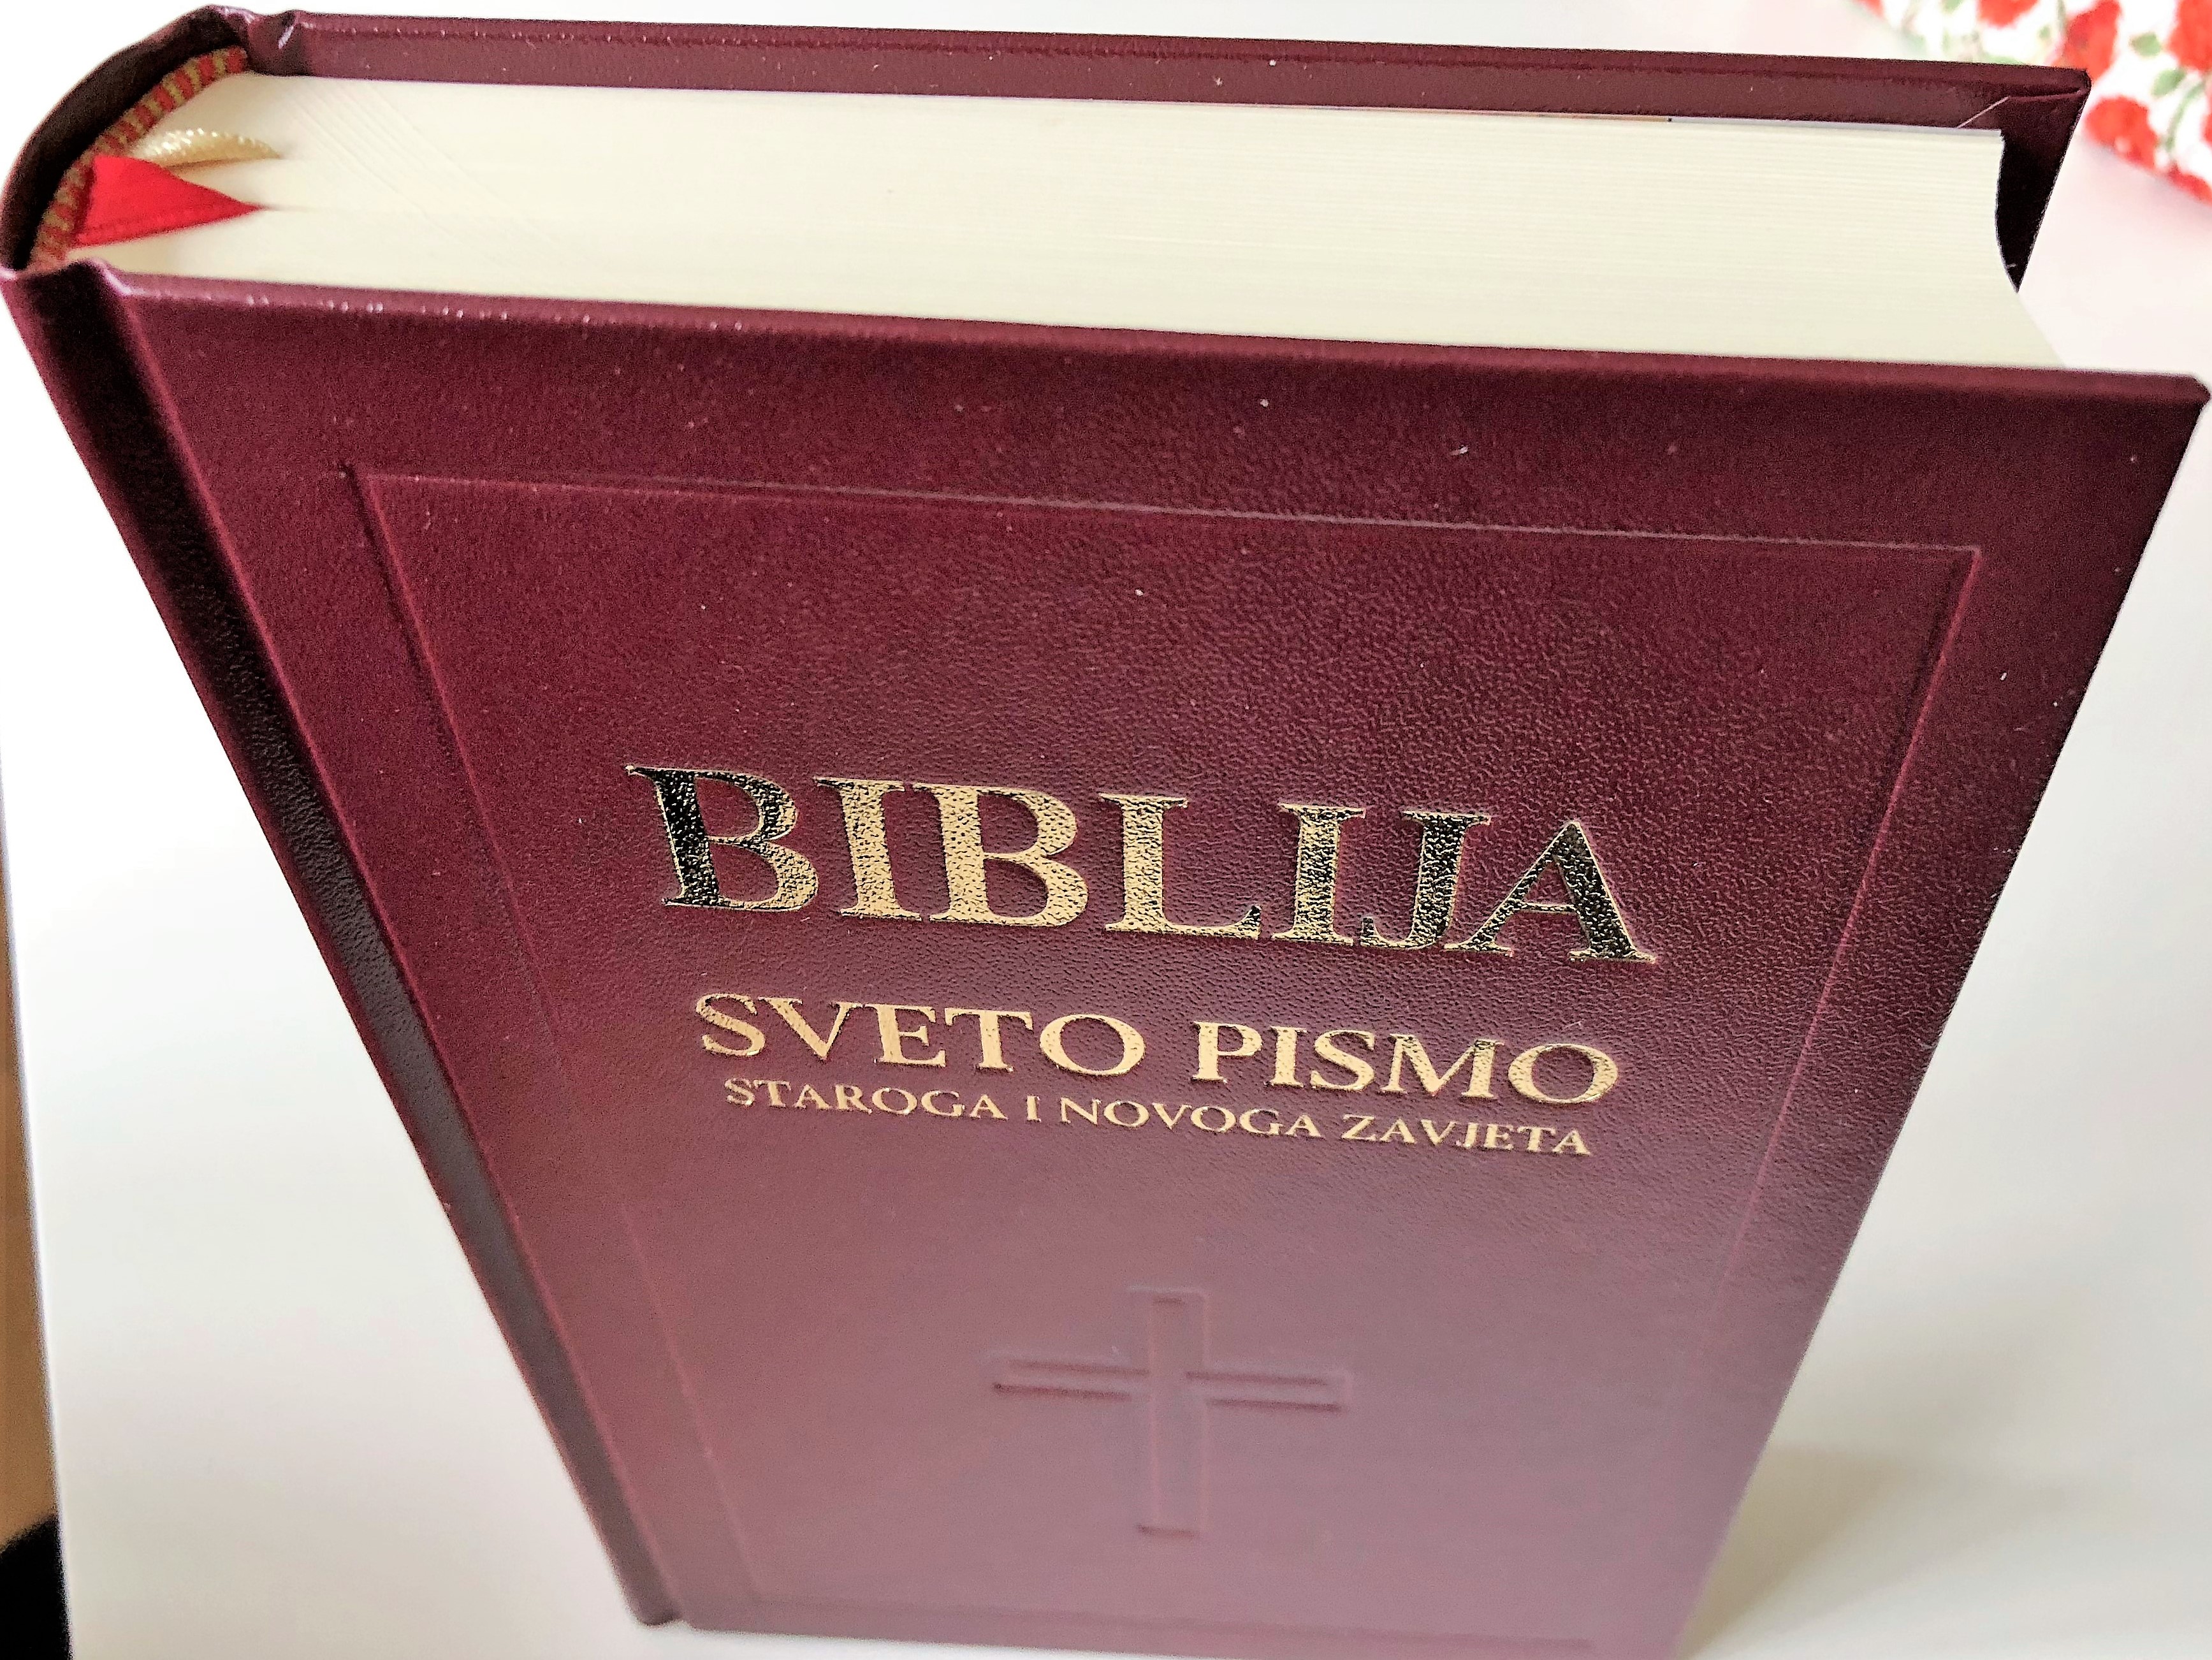 croatian-bible-with-deuterocanonical-books-burg-13-.jpg